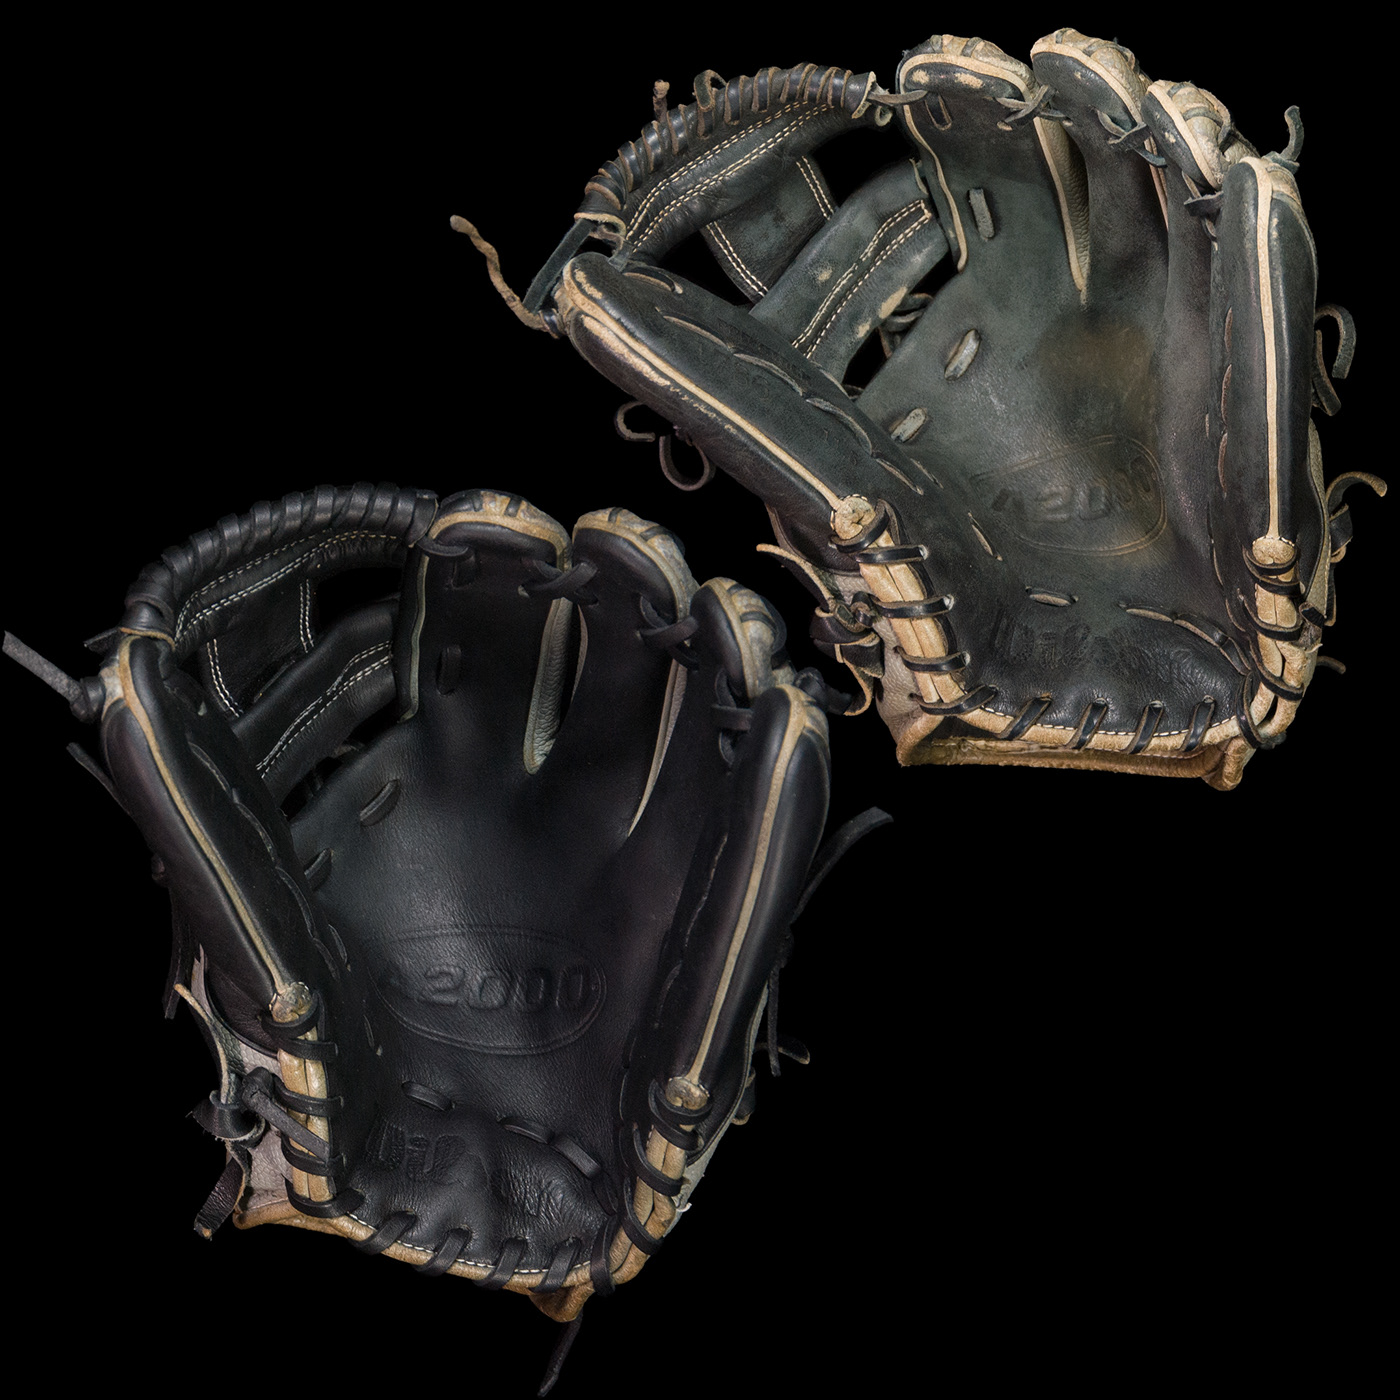 Gowdy Gloves Baseball Glove Relace Wilson Sporting Goods Wilson Baseball VCU Richmond baseball mlb Sports Design a2000